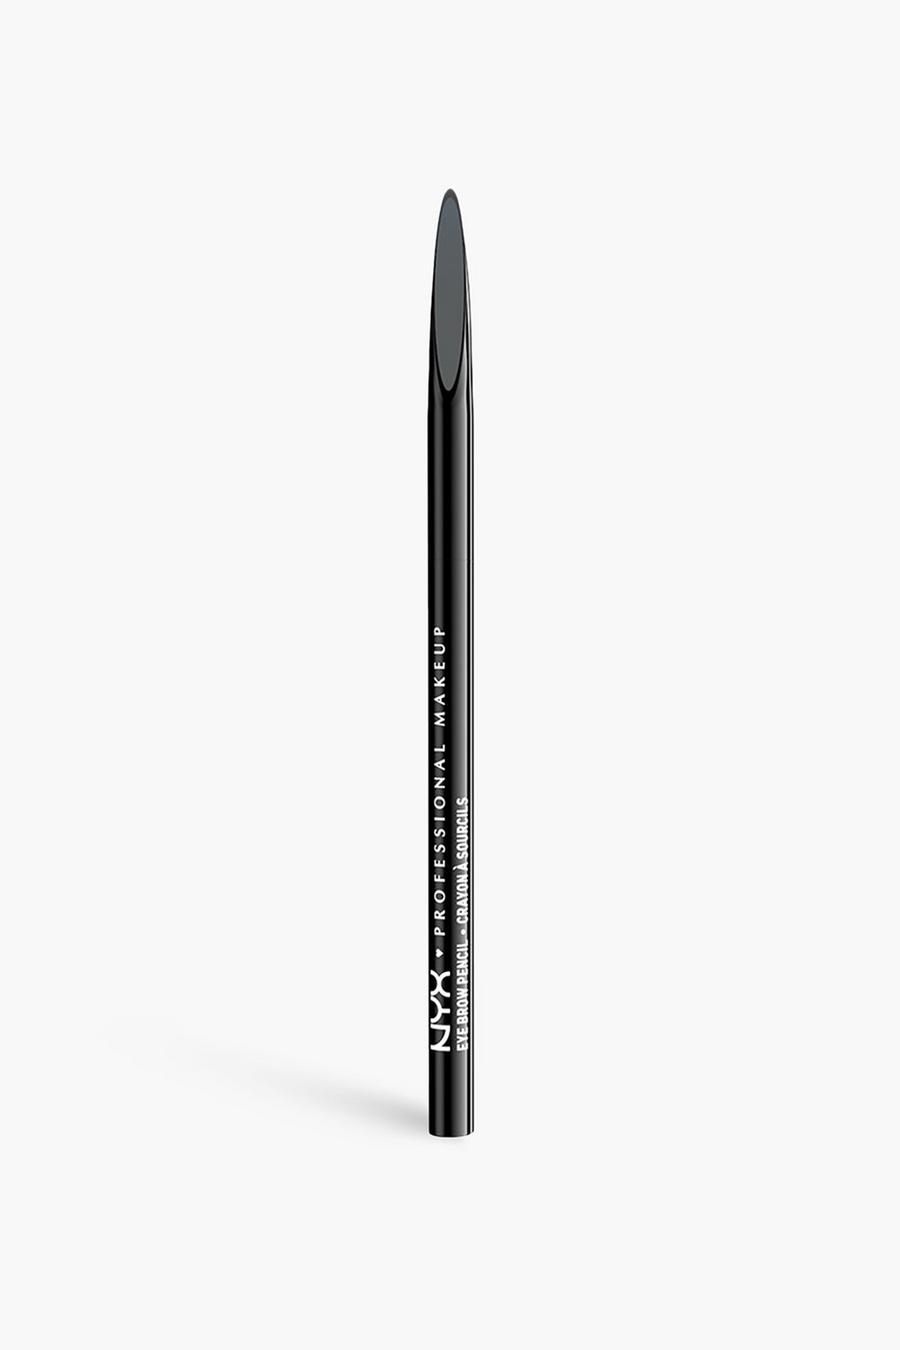 07 charcoal Nyx Professional Makeup Precision Brow Pencil